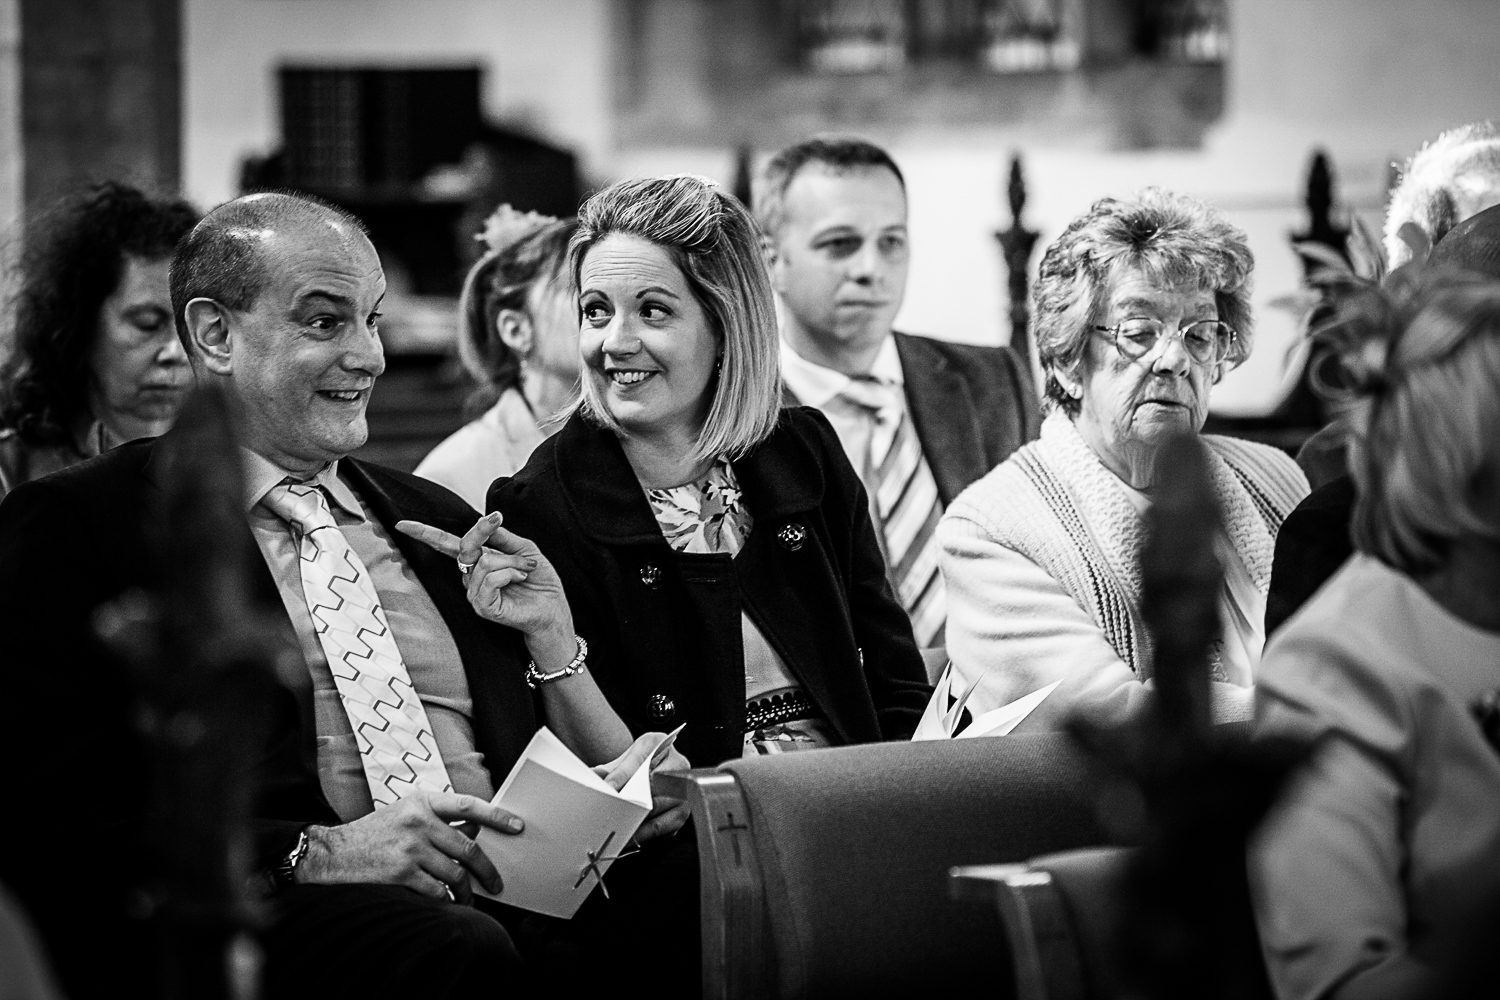 Wedding Ceremony at Cottenham All Saint’s Church - Swynford Manor Wedding Photographer